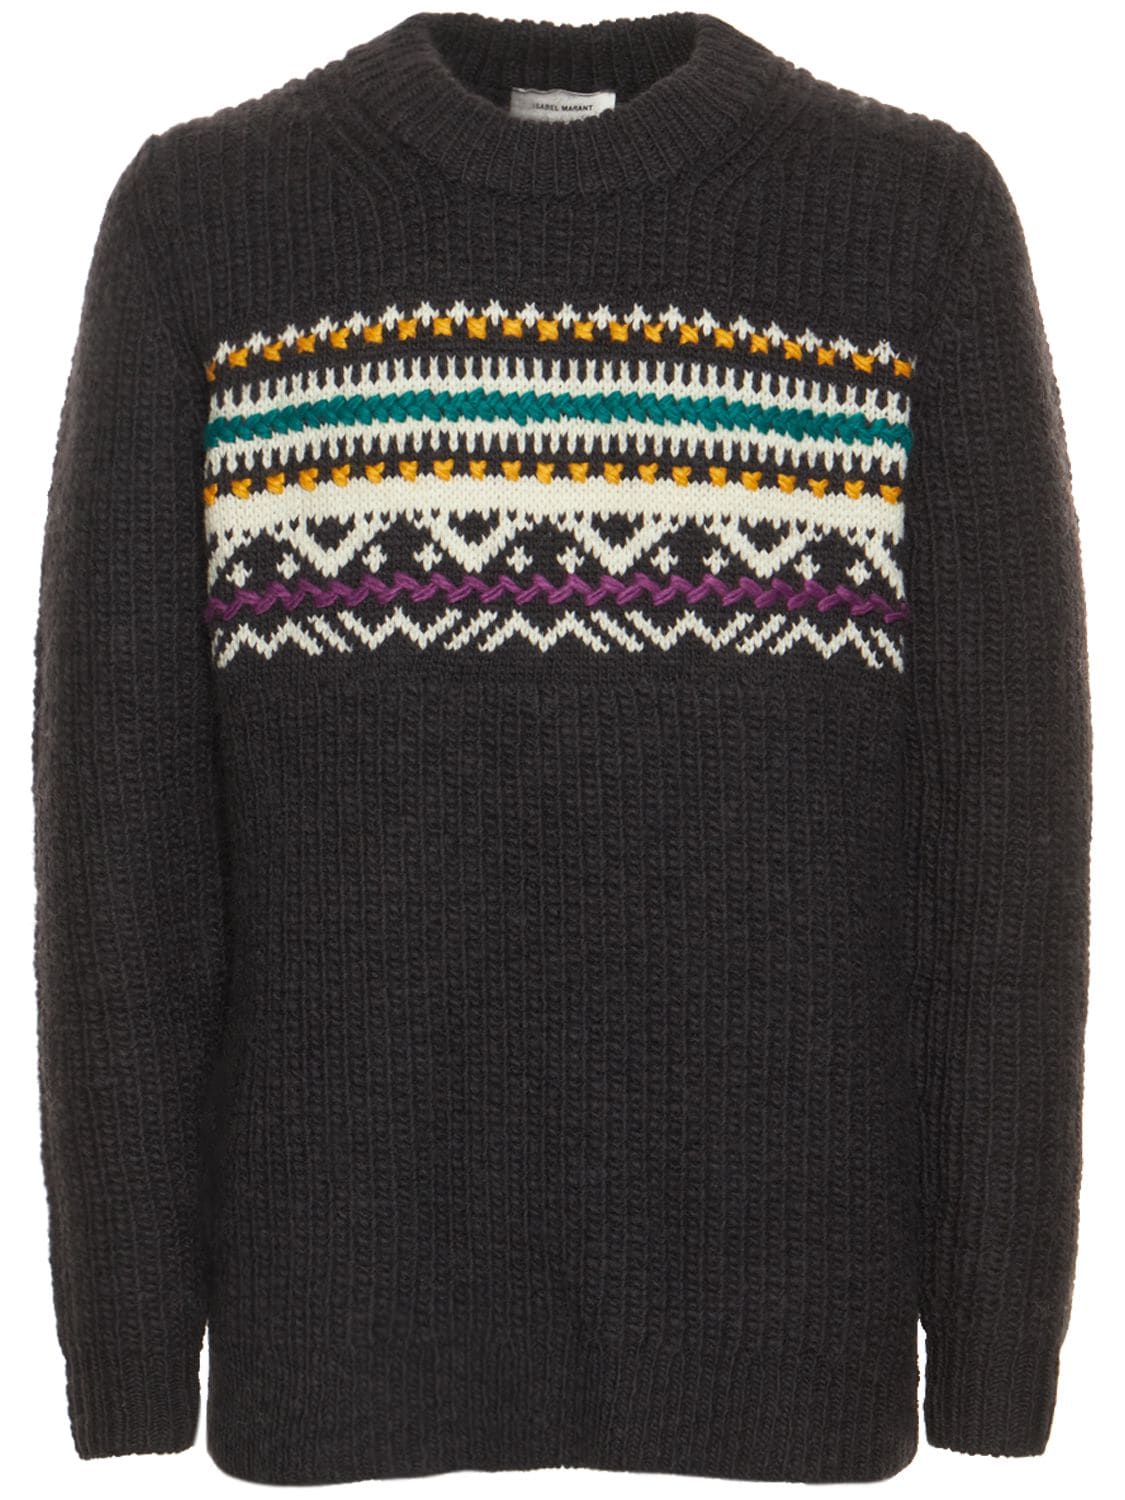 Crafty Intarsia Wool Blend Knit Sweater